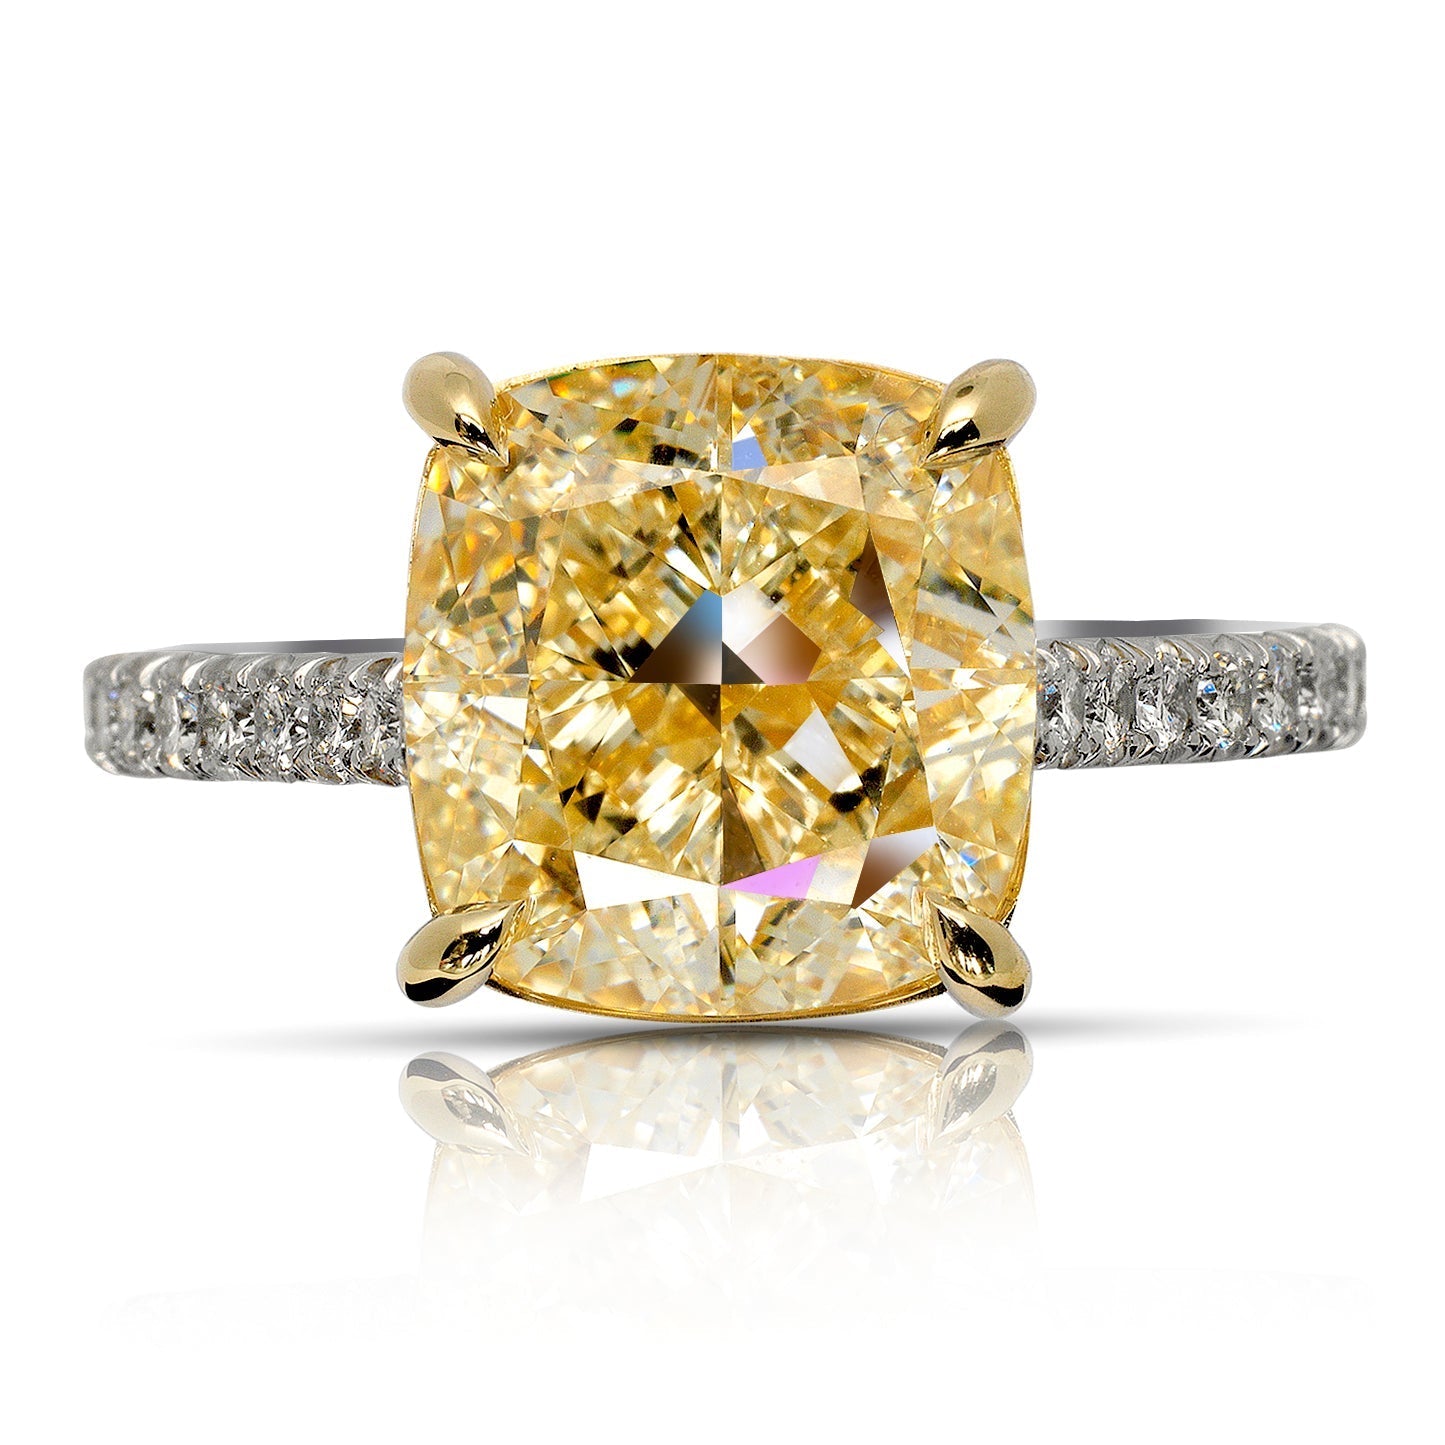 King Jewelers' KJ5 Engagement Rings - King Jewelers | Jewelry Store  Nashville